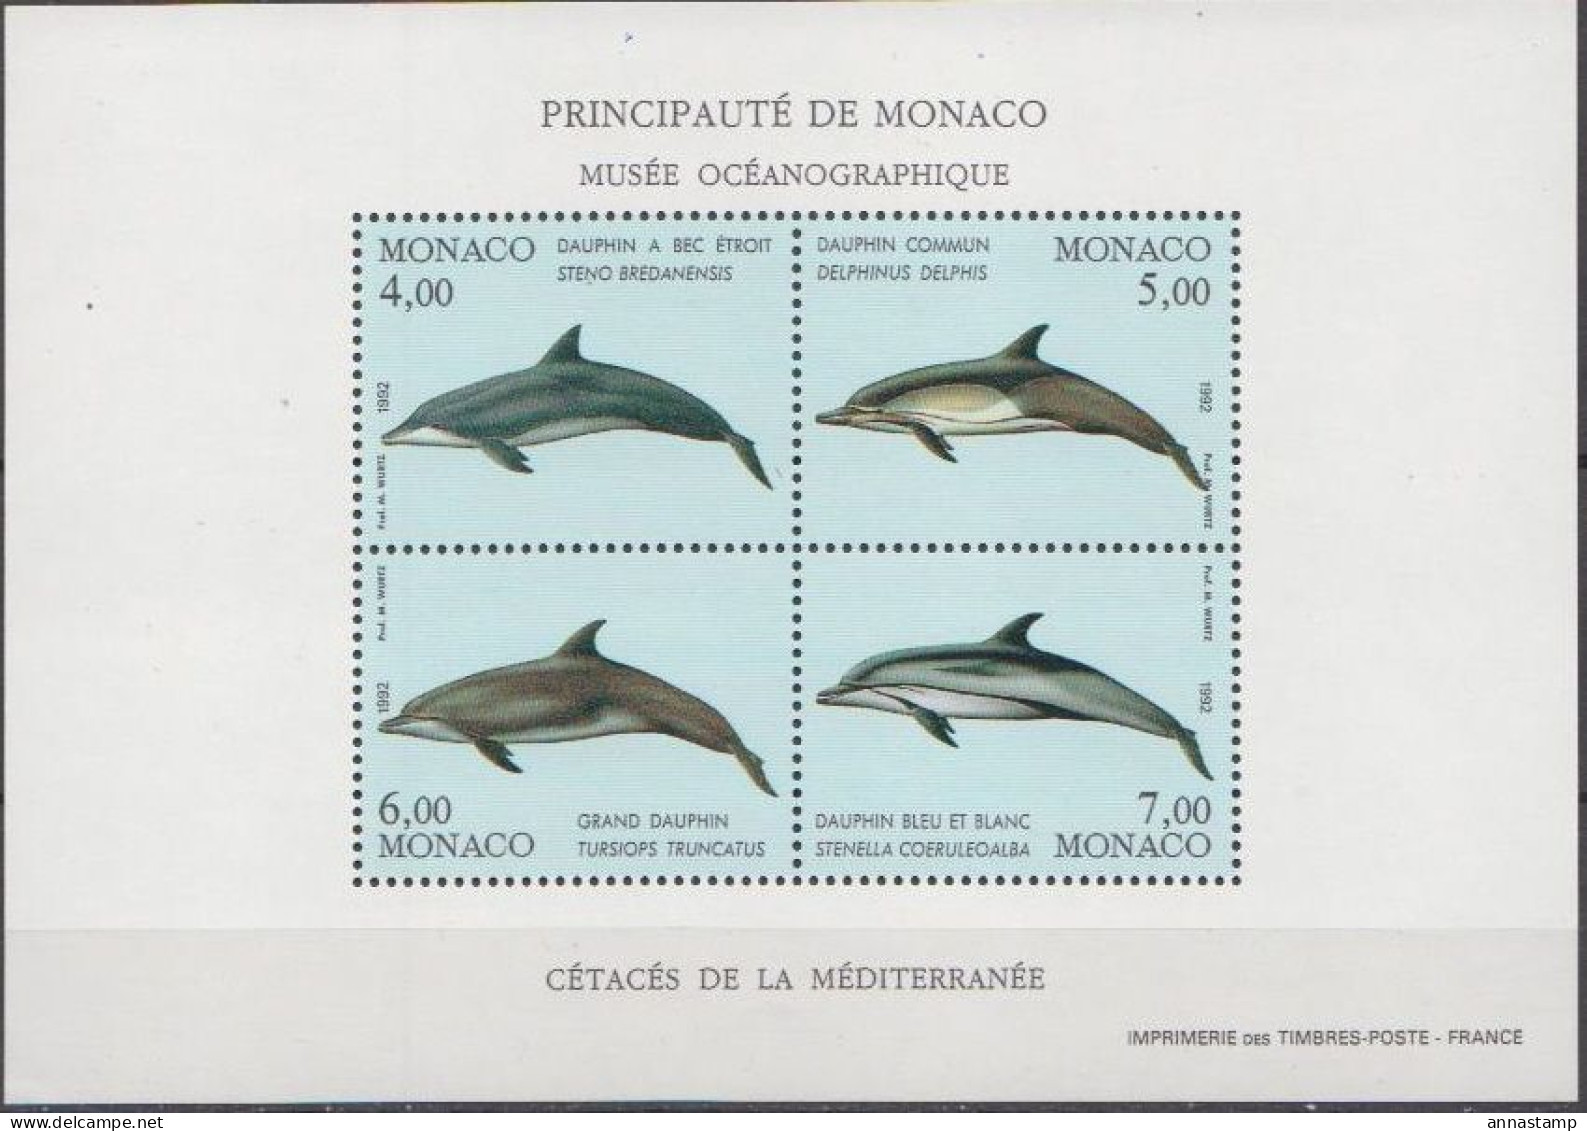 Monaco MNH Minisheet - Dauphins